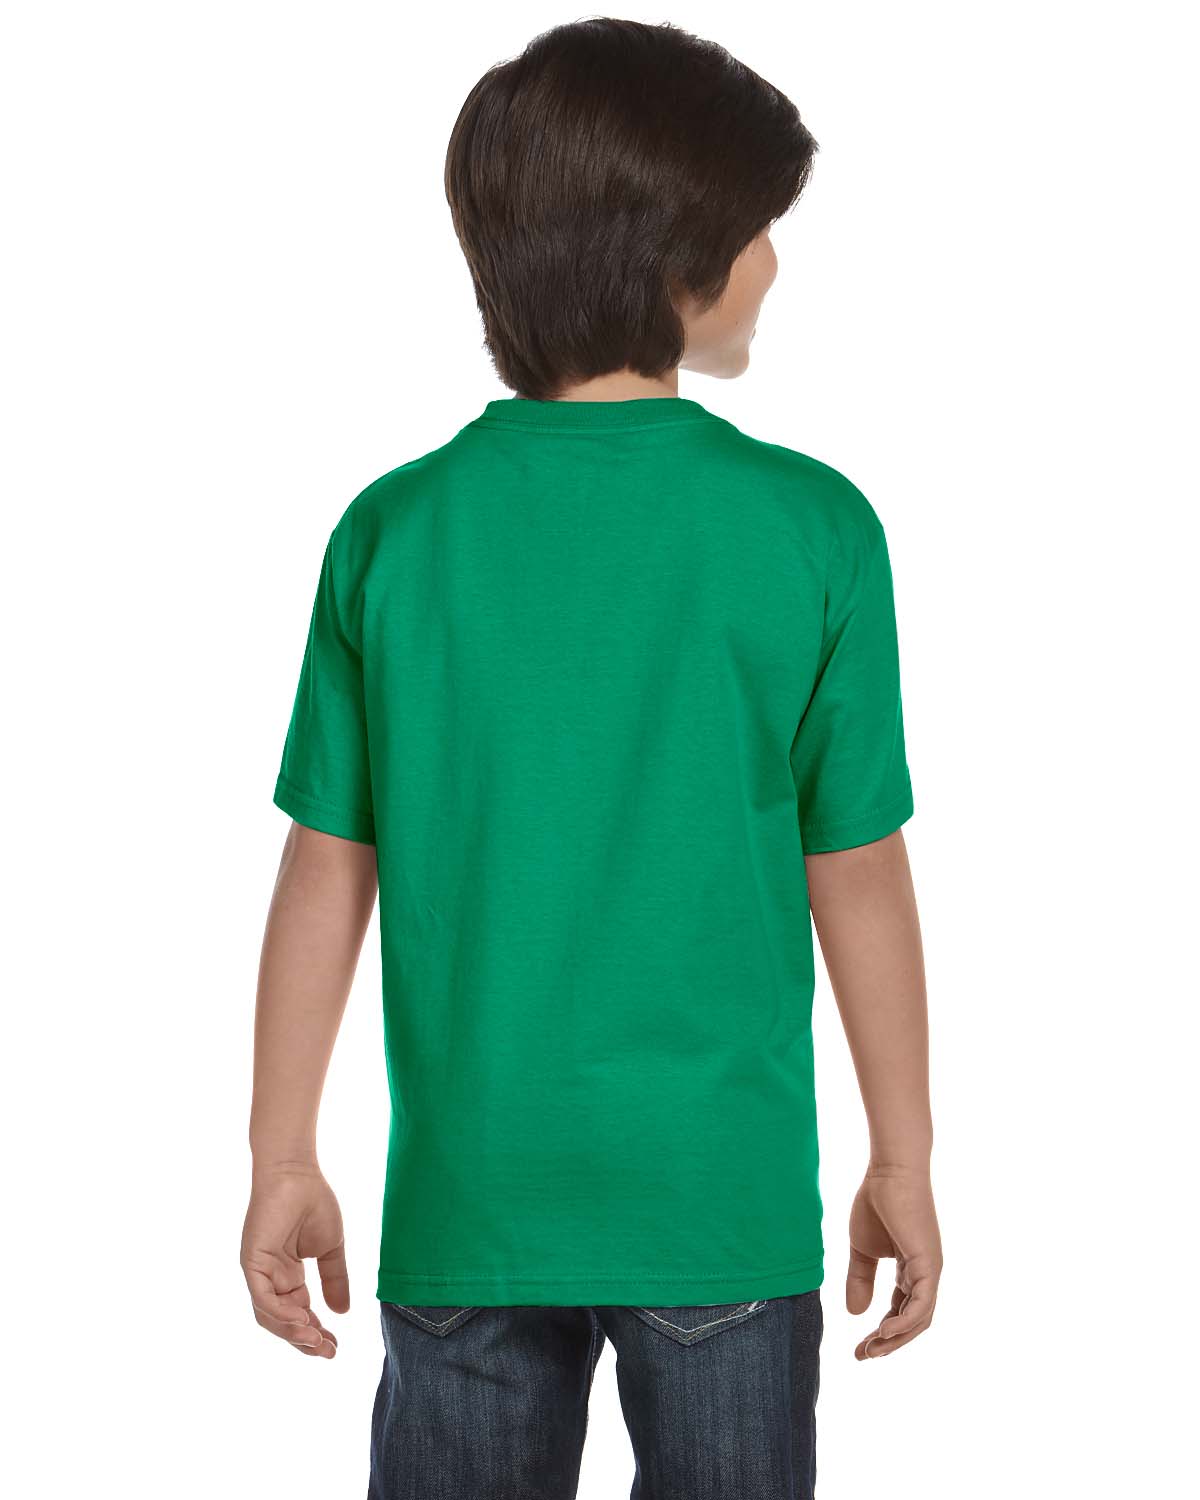 Kids Childrens Boys Girls IRISH KELLY or KIWI GREEN T-Shirt Tee Shirt Tshirt 